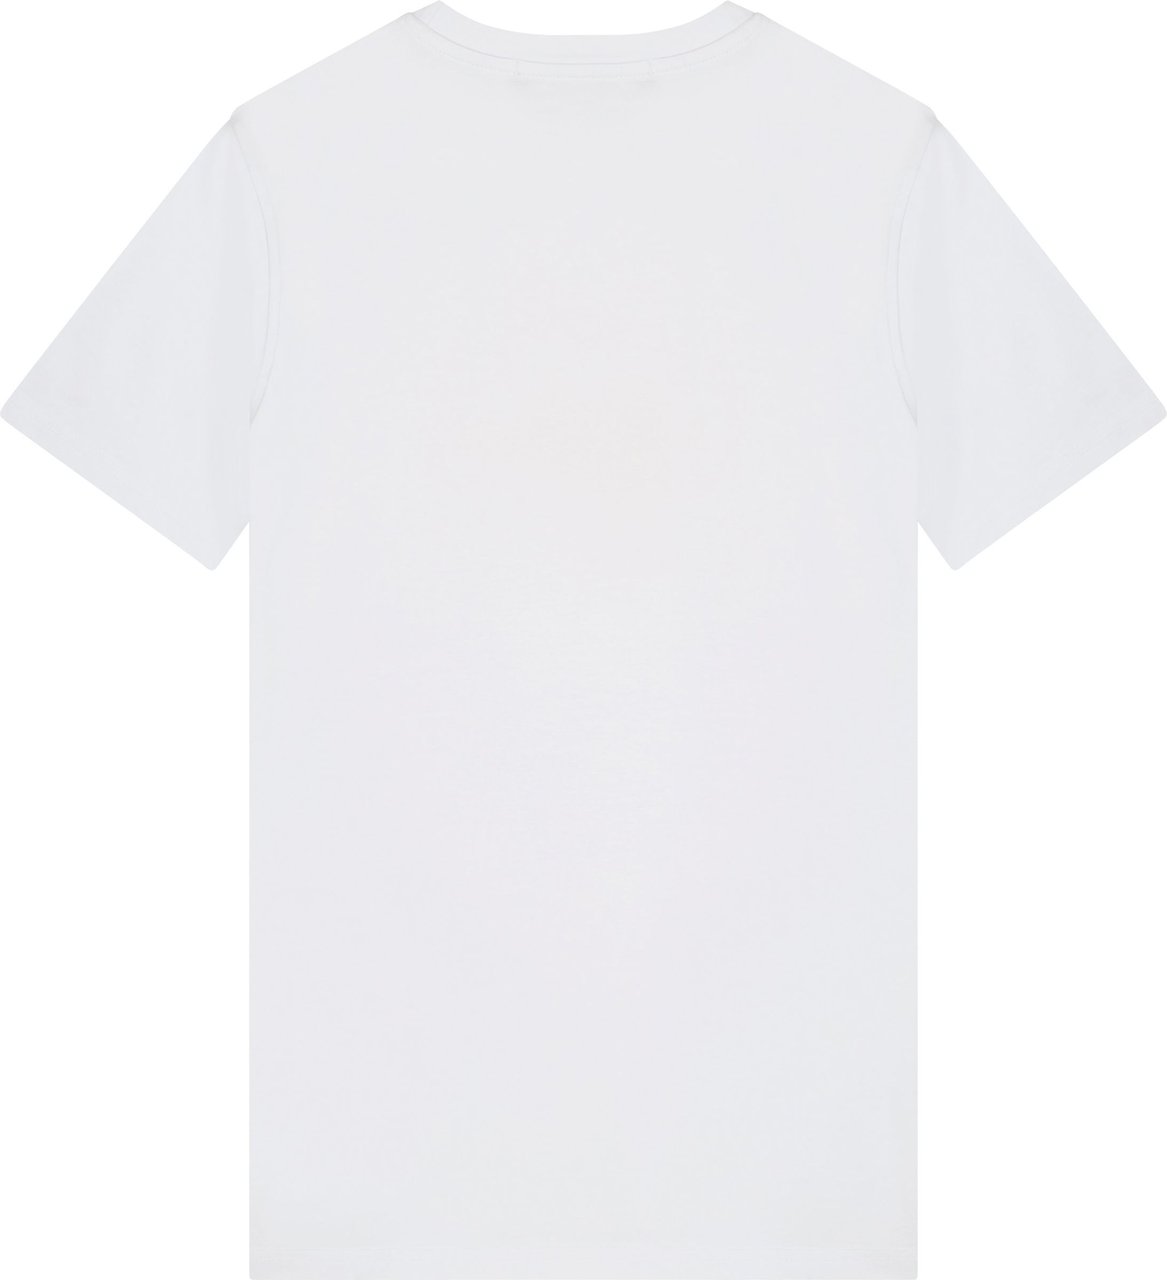 Malelions Signature T-Shirt - White/Orange Wit